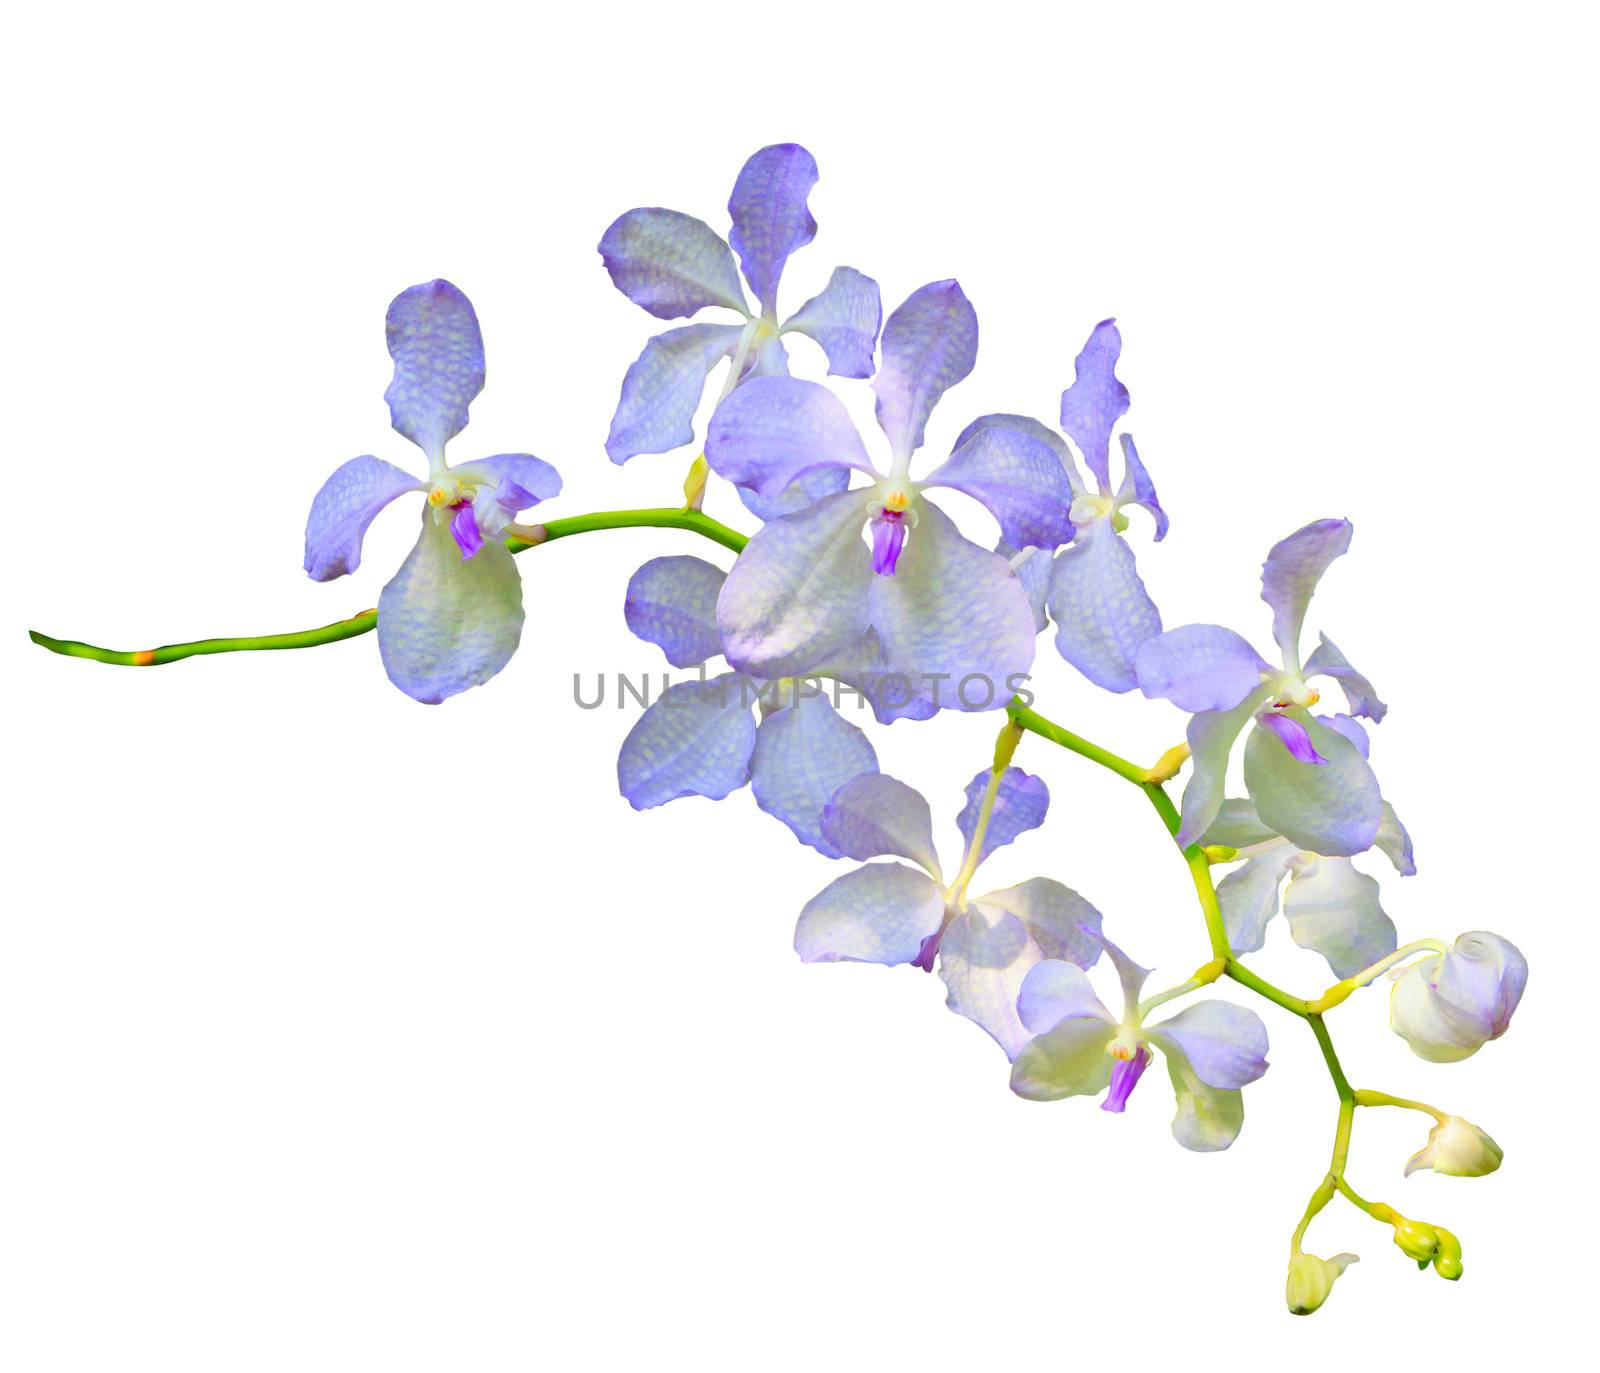  purple vanda coerulea orchid flower isolated on white backgroun by khunaspix